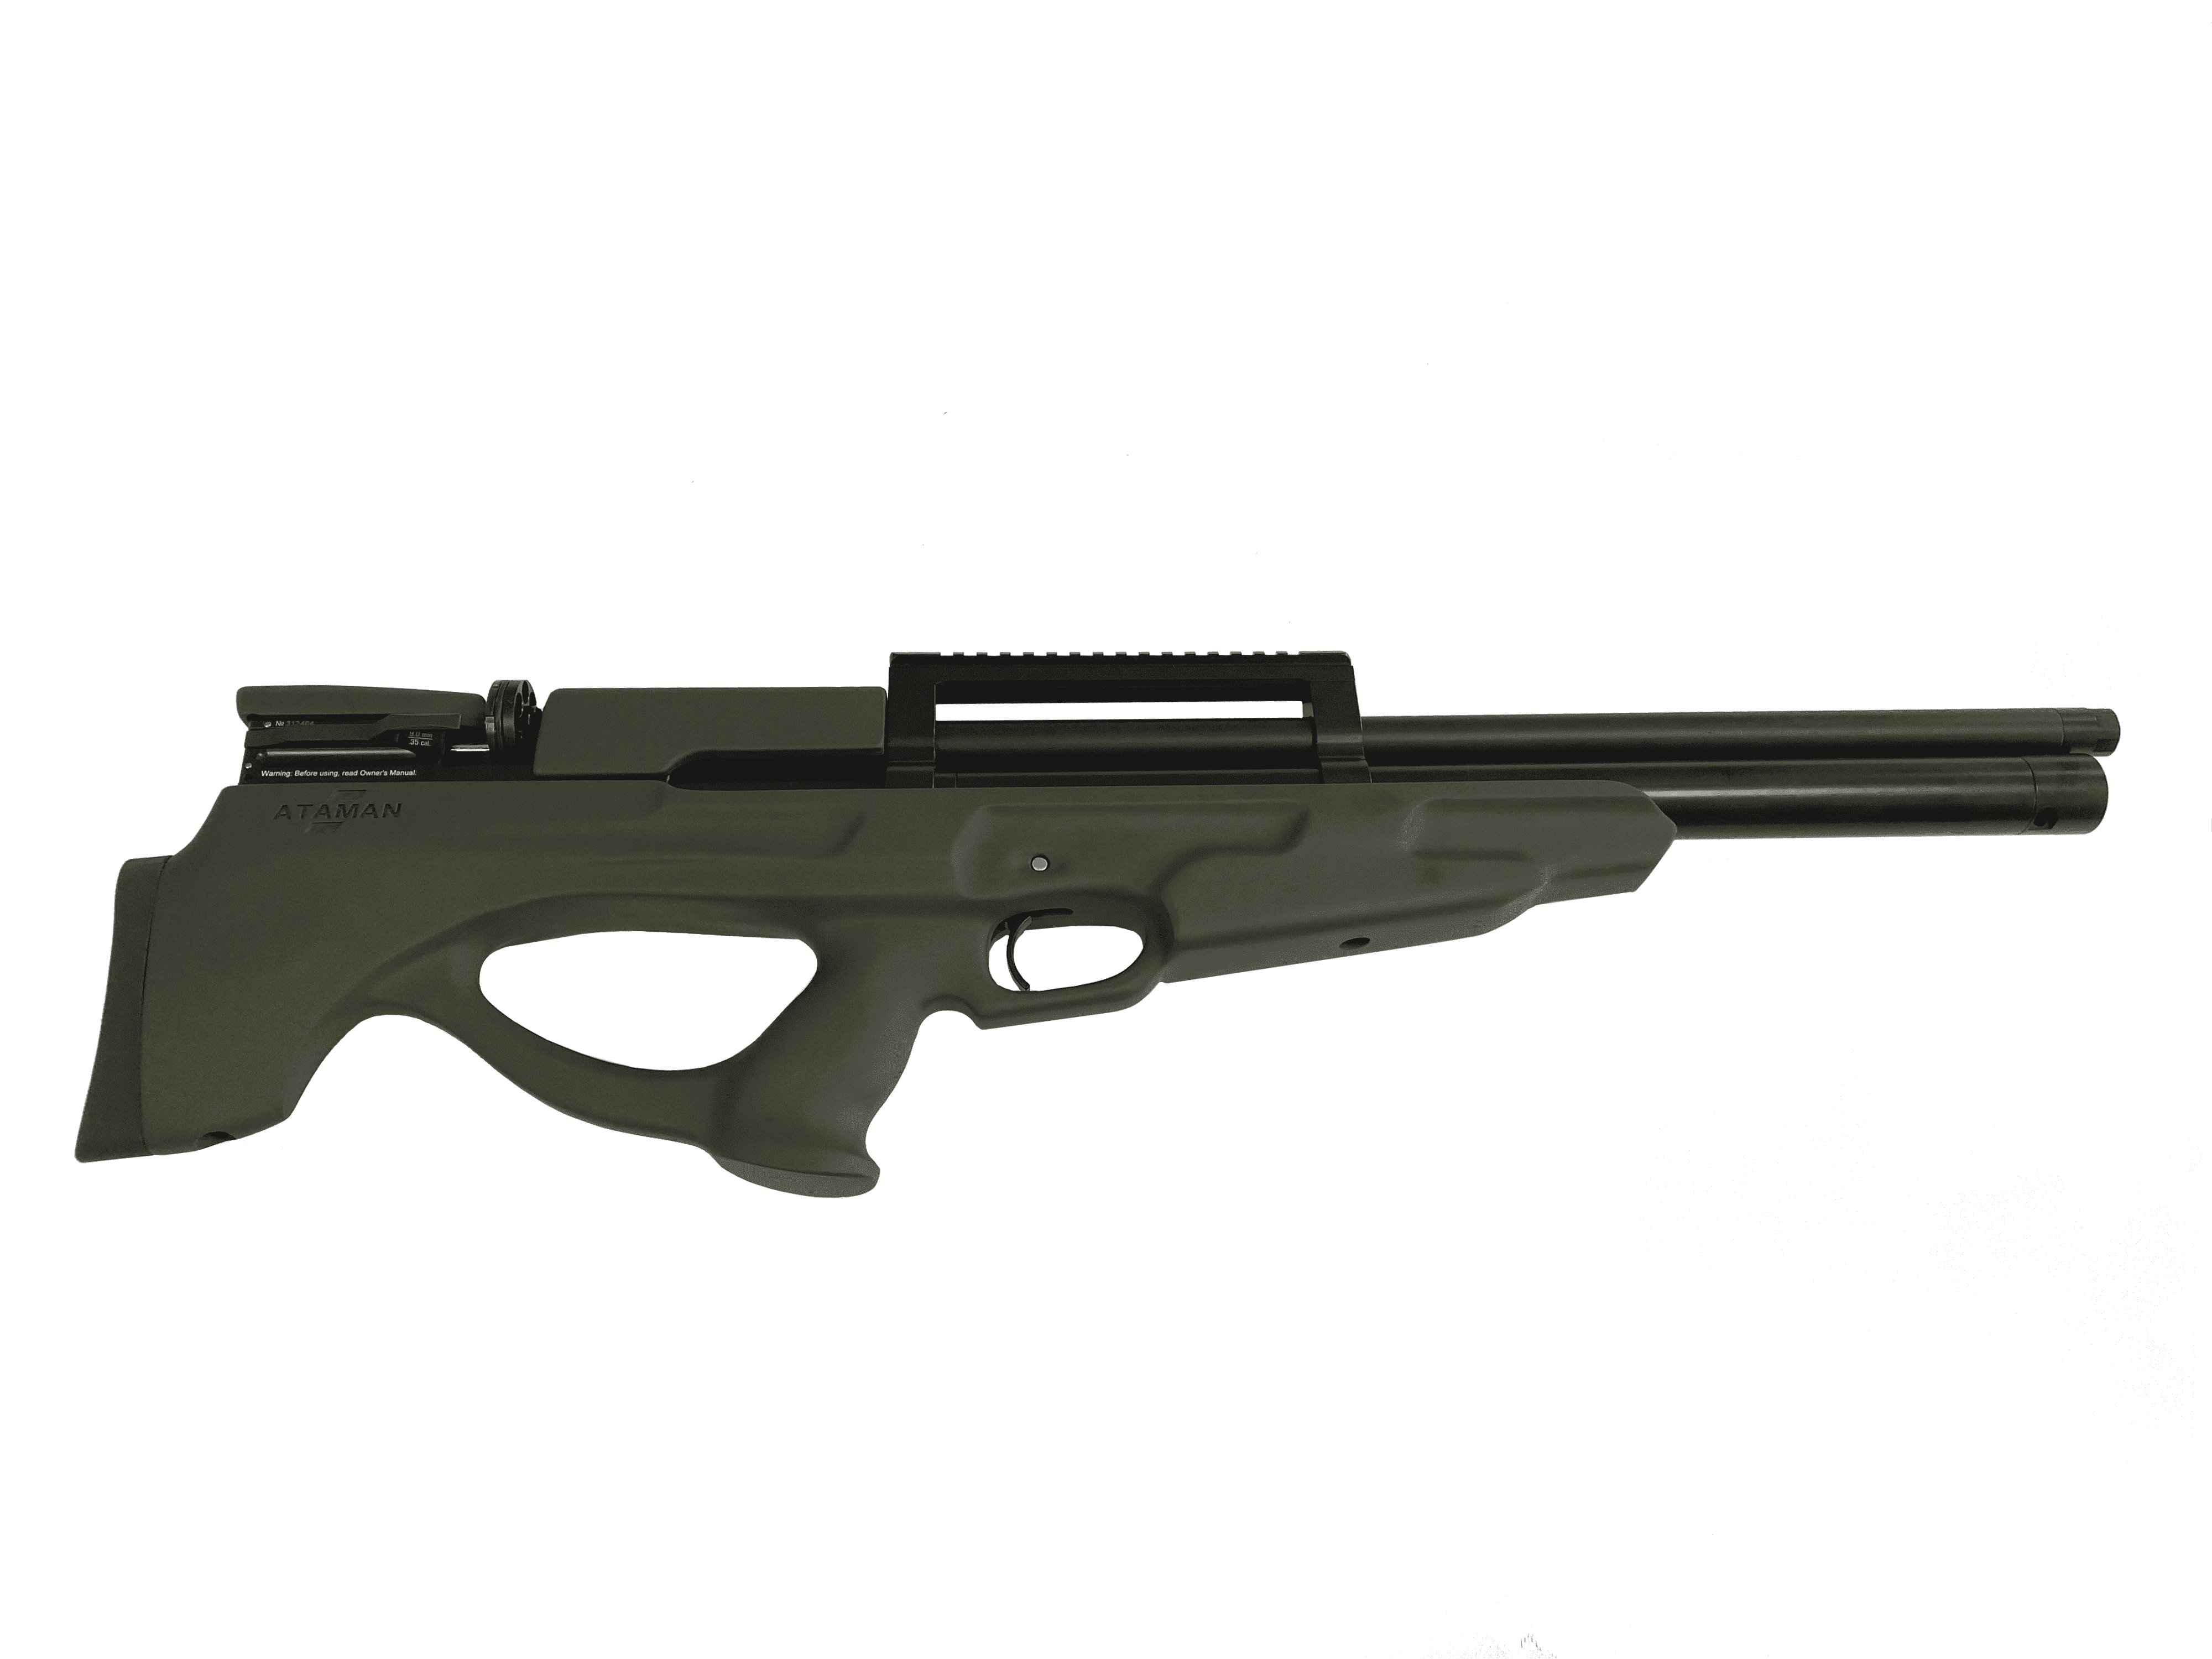 Пневматическая PCP винтовка ATAMAN M2R Булл-пап Тип 2, кал.9мм (Walnut)